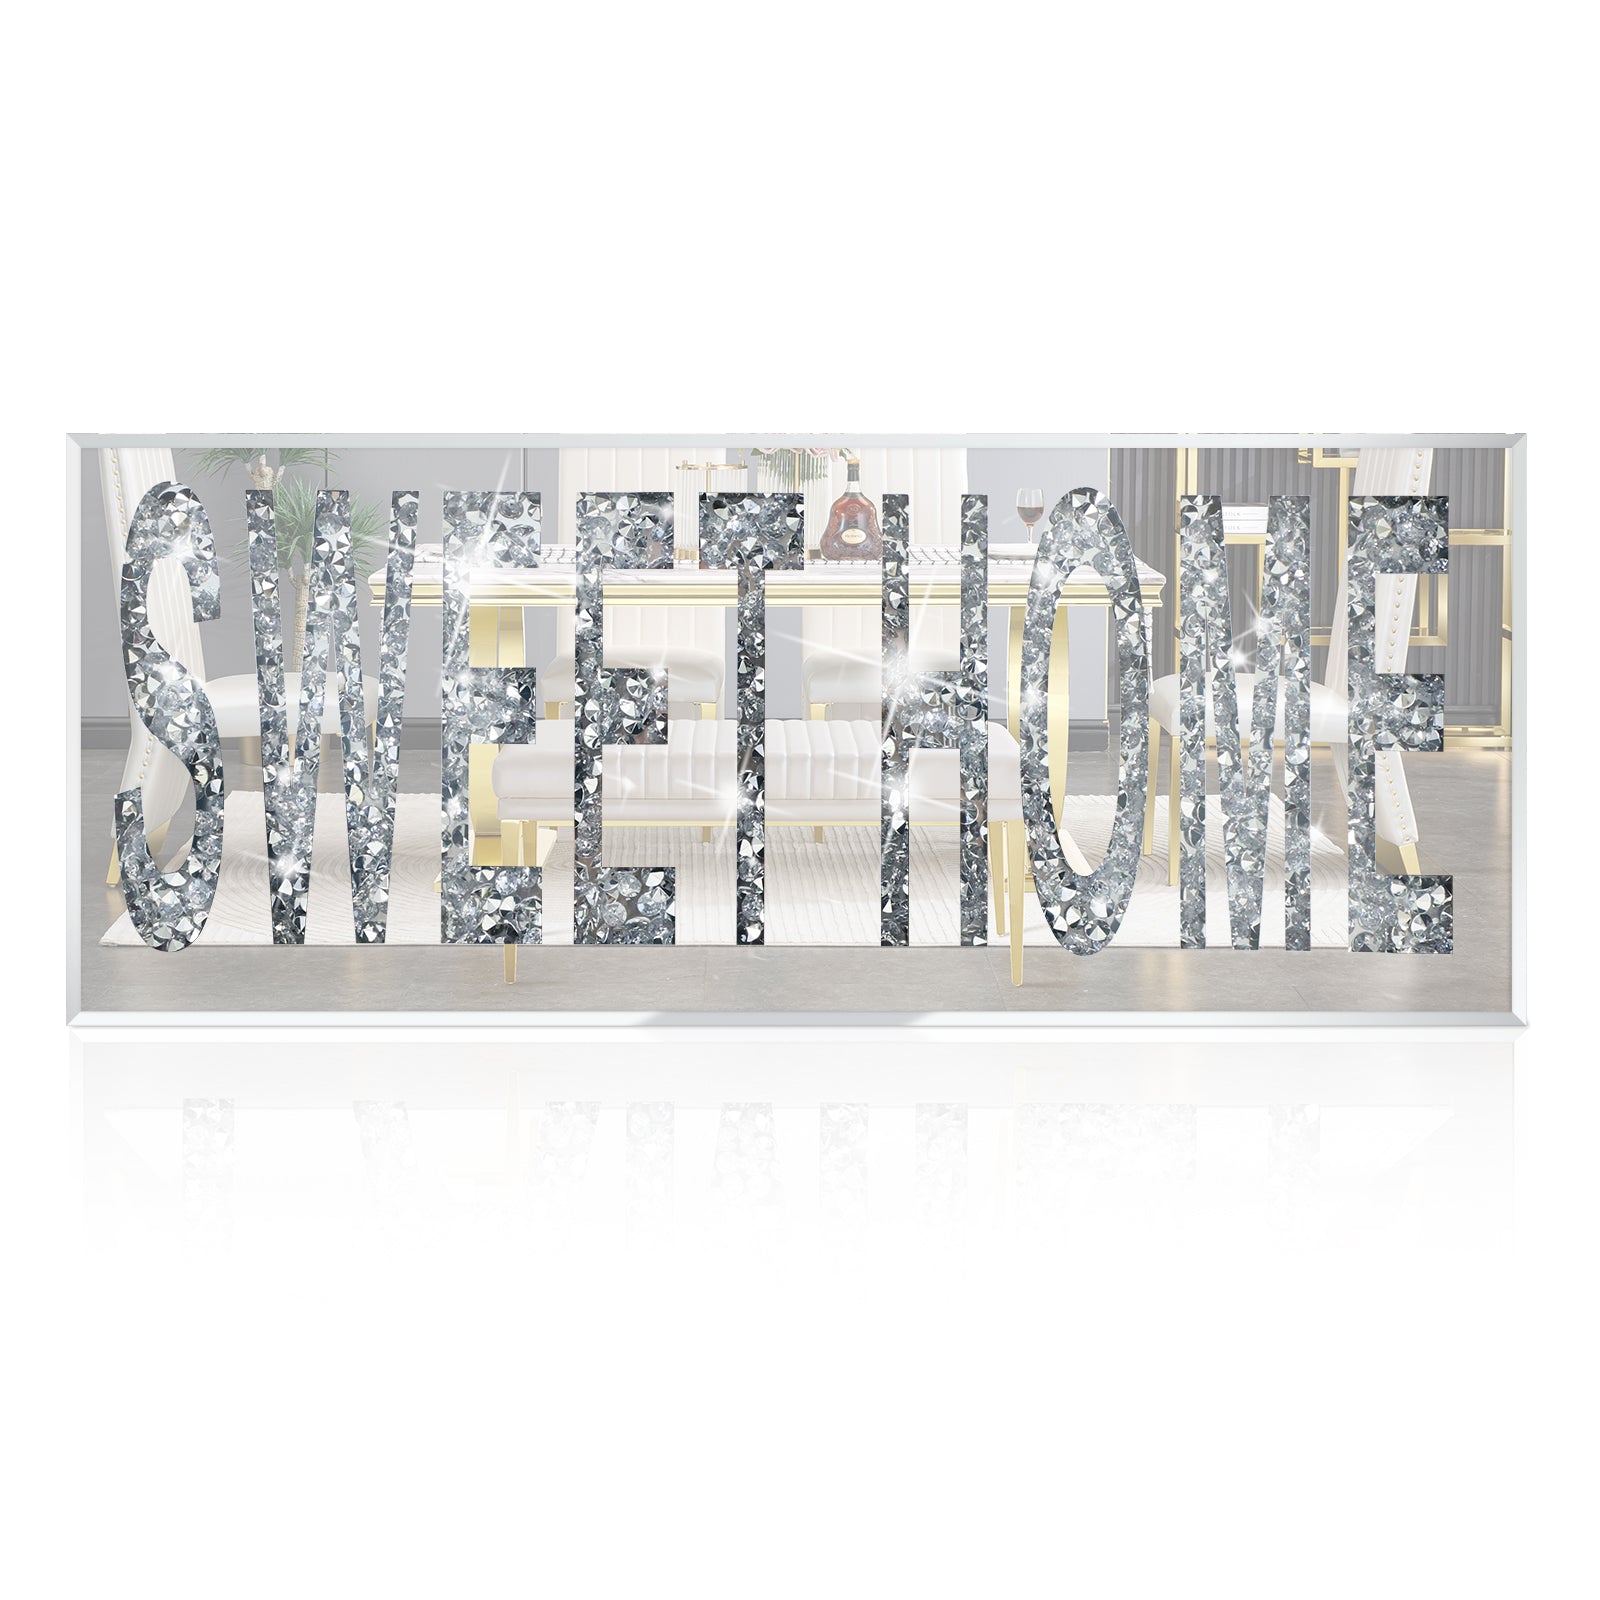 Glass Rectangle mirror | SWEET HOME sign | Minimalist Wall Art Decor